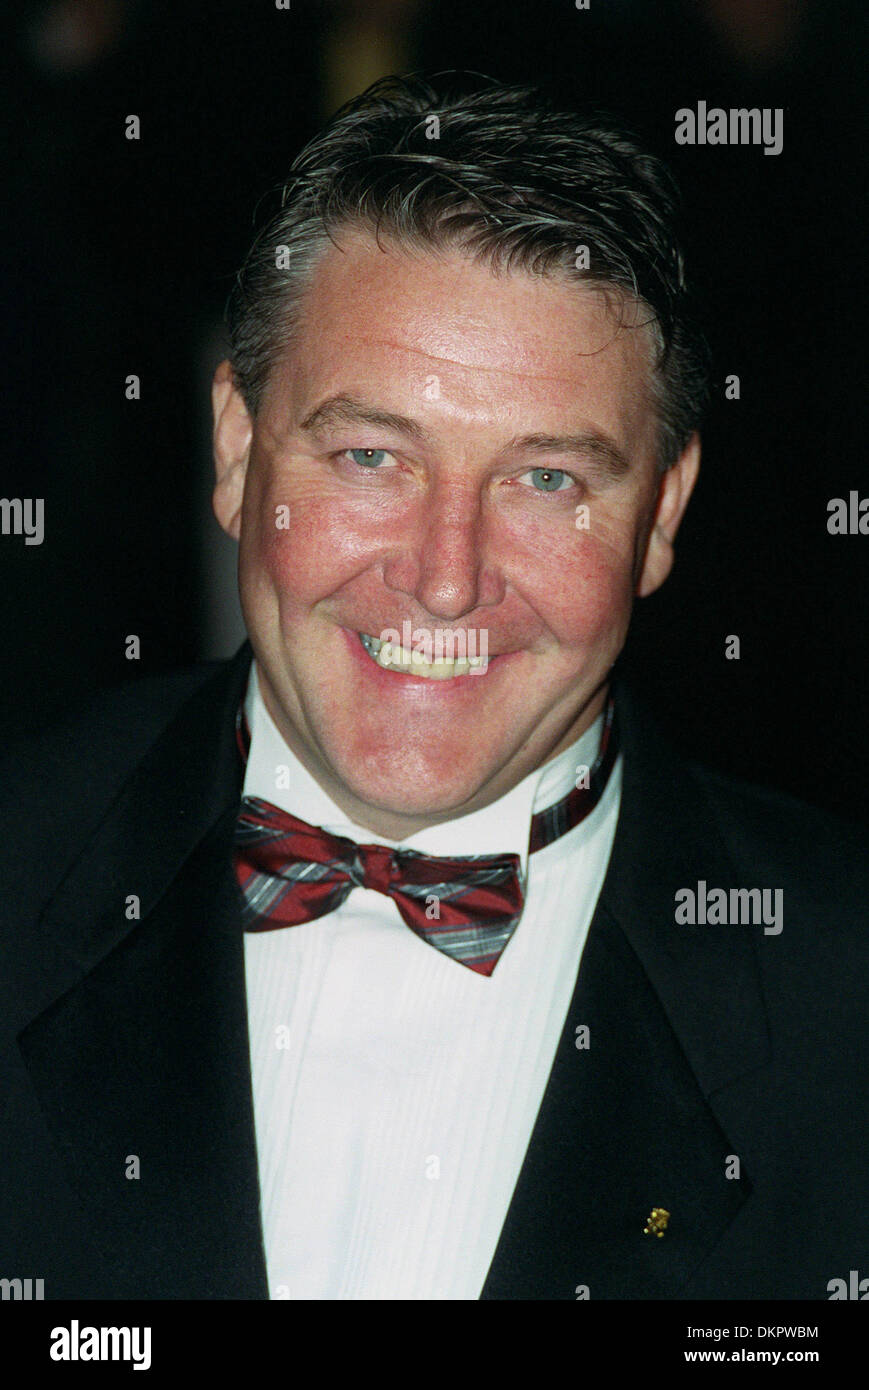 TOMMY WALSH.TV PRESENTER, ''GROUND FORCE''.LAND.ROYAL ALBERT HALL, LONDON, ENG.23/10/2001.BM17E28 Stock Photo